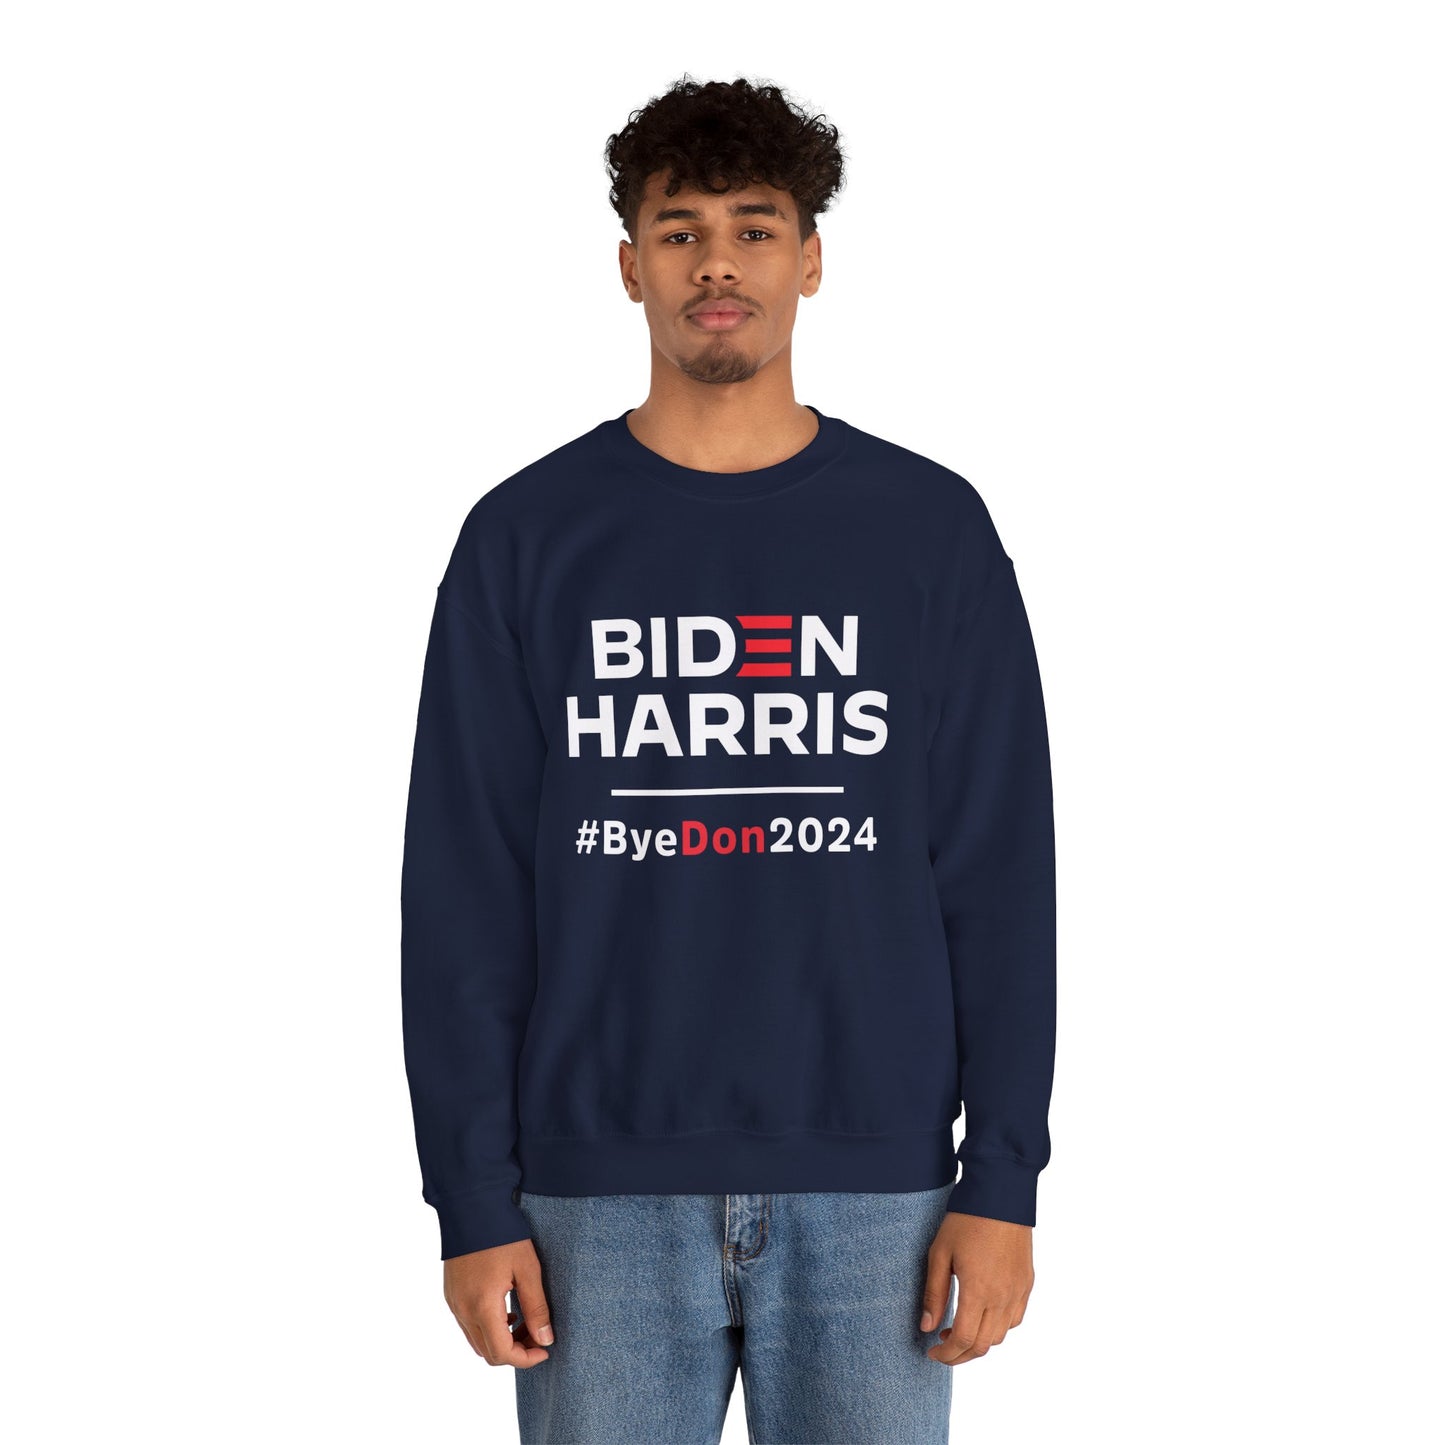 “Biden Harris #ByeDon2024 Election” Unisex Sweatshirt